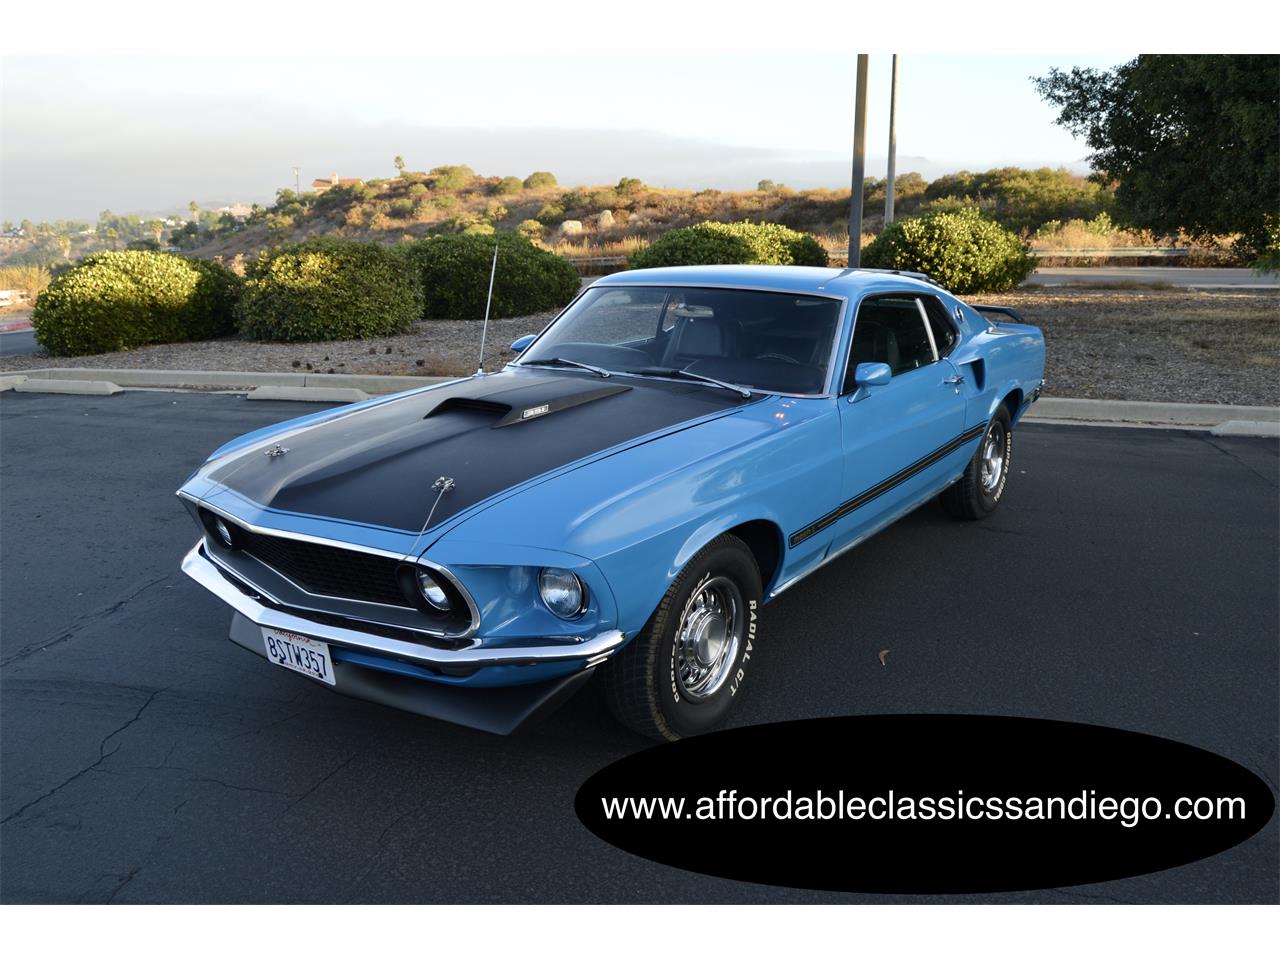 For Sale: 1969 Ford Mustang Mach 1 in El Cajon, California for sale in El Cajon, CA